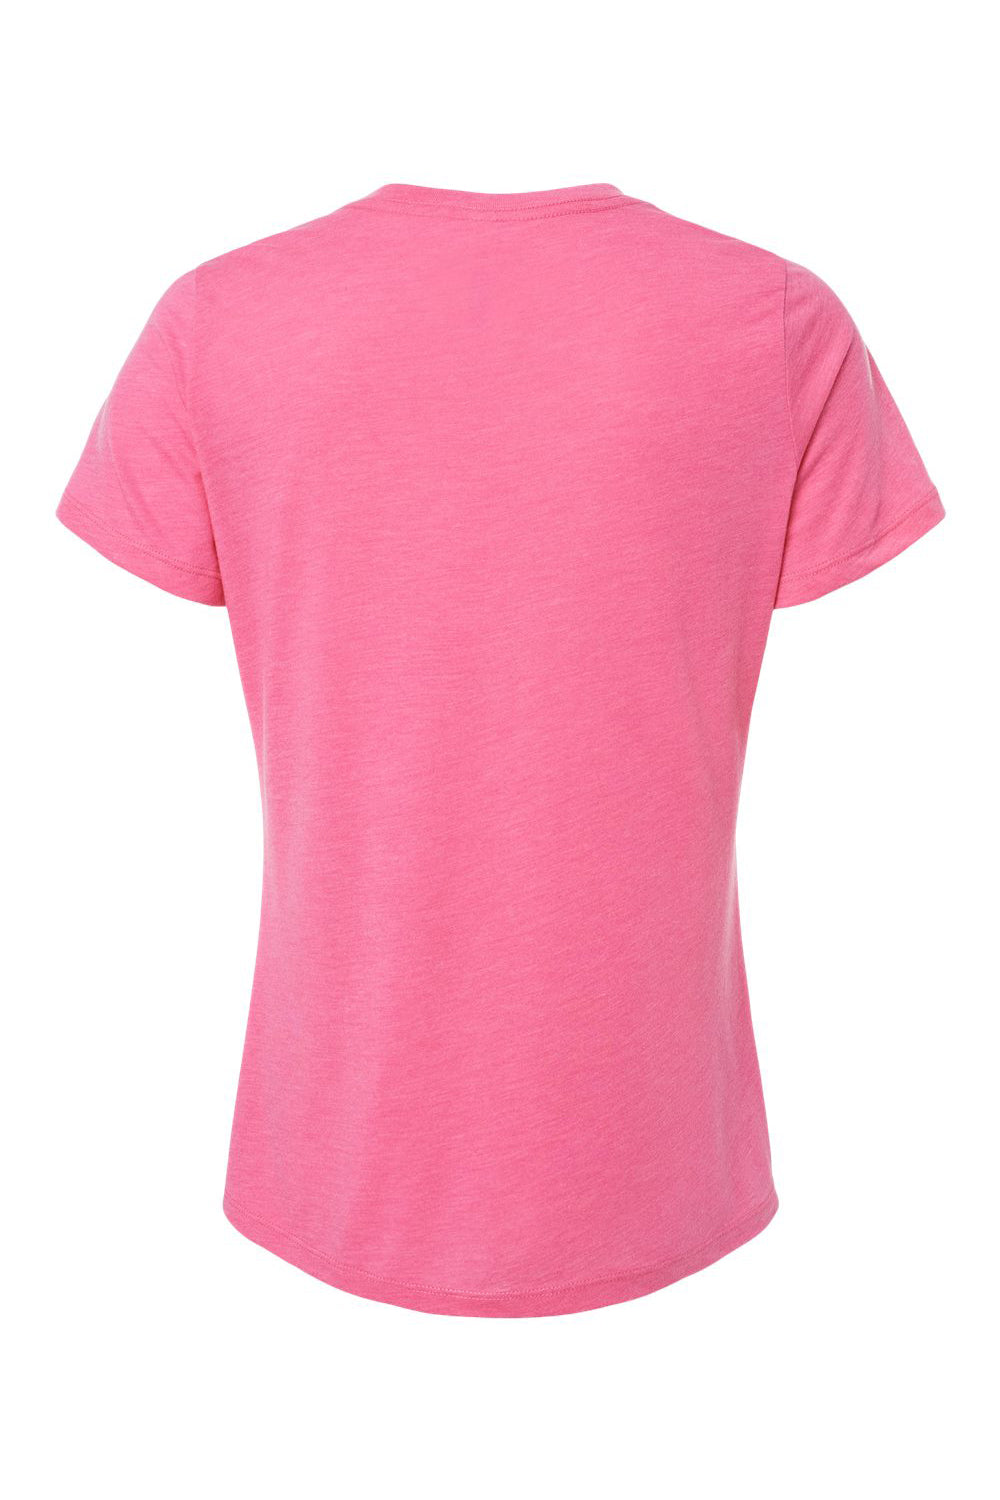 Bella + Canvas BC6413 Womens Short Sleeve Crewneck T-Shirt Charity Pink Flat Back